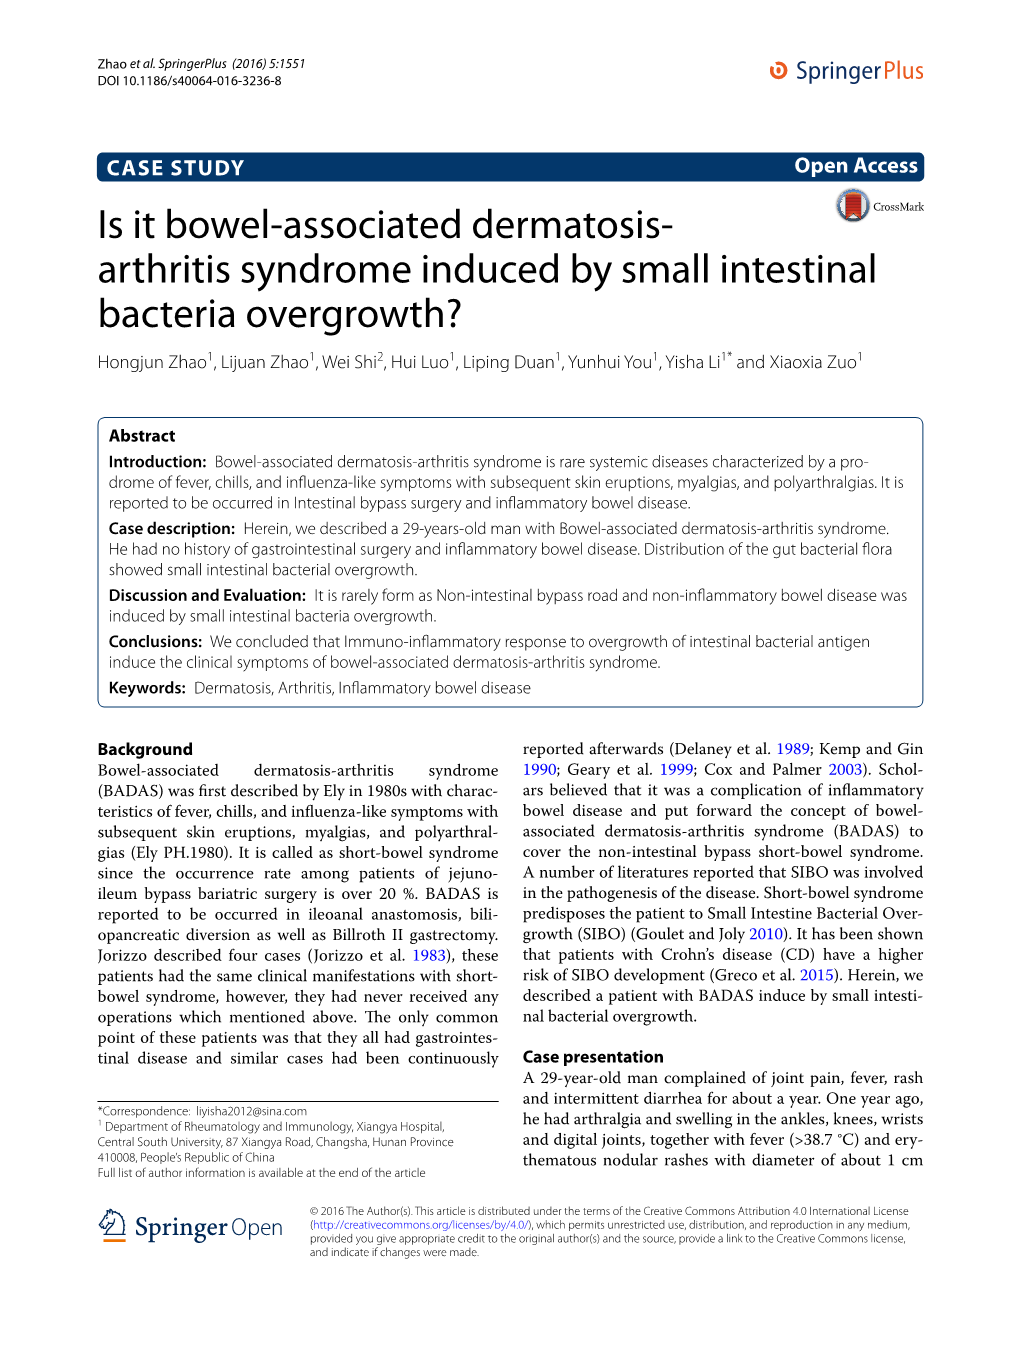 Is It Bowel-Associated Dermatosis-Arthritis Syndrome